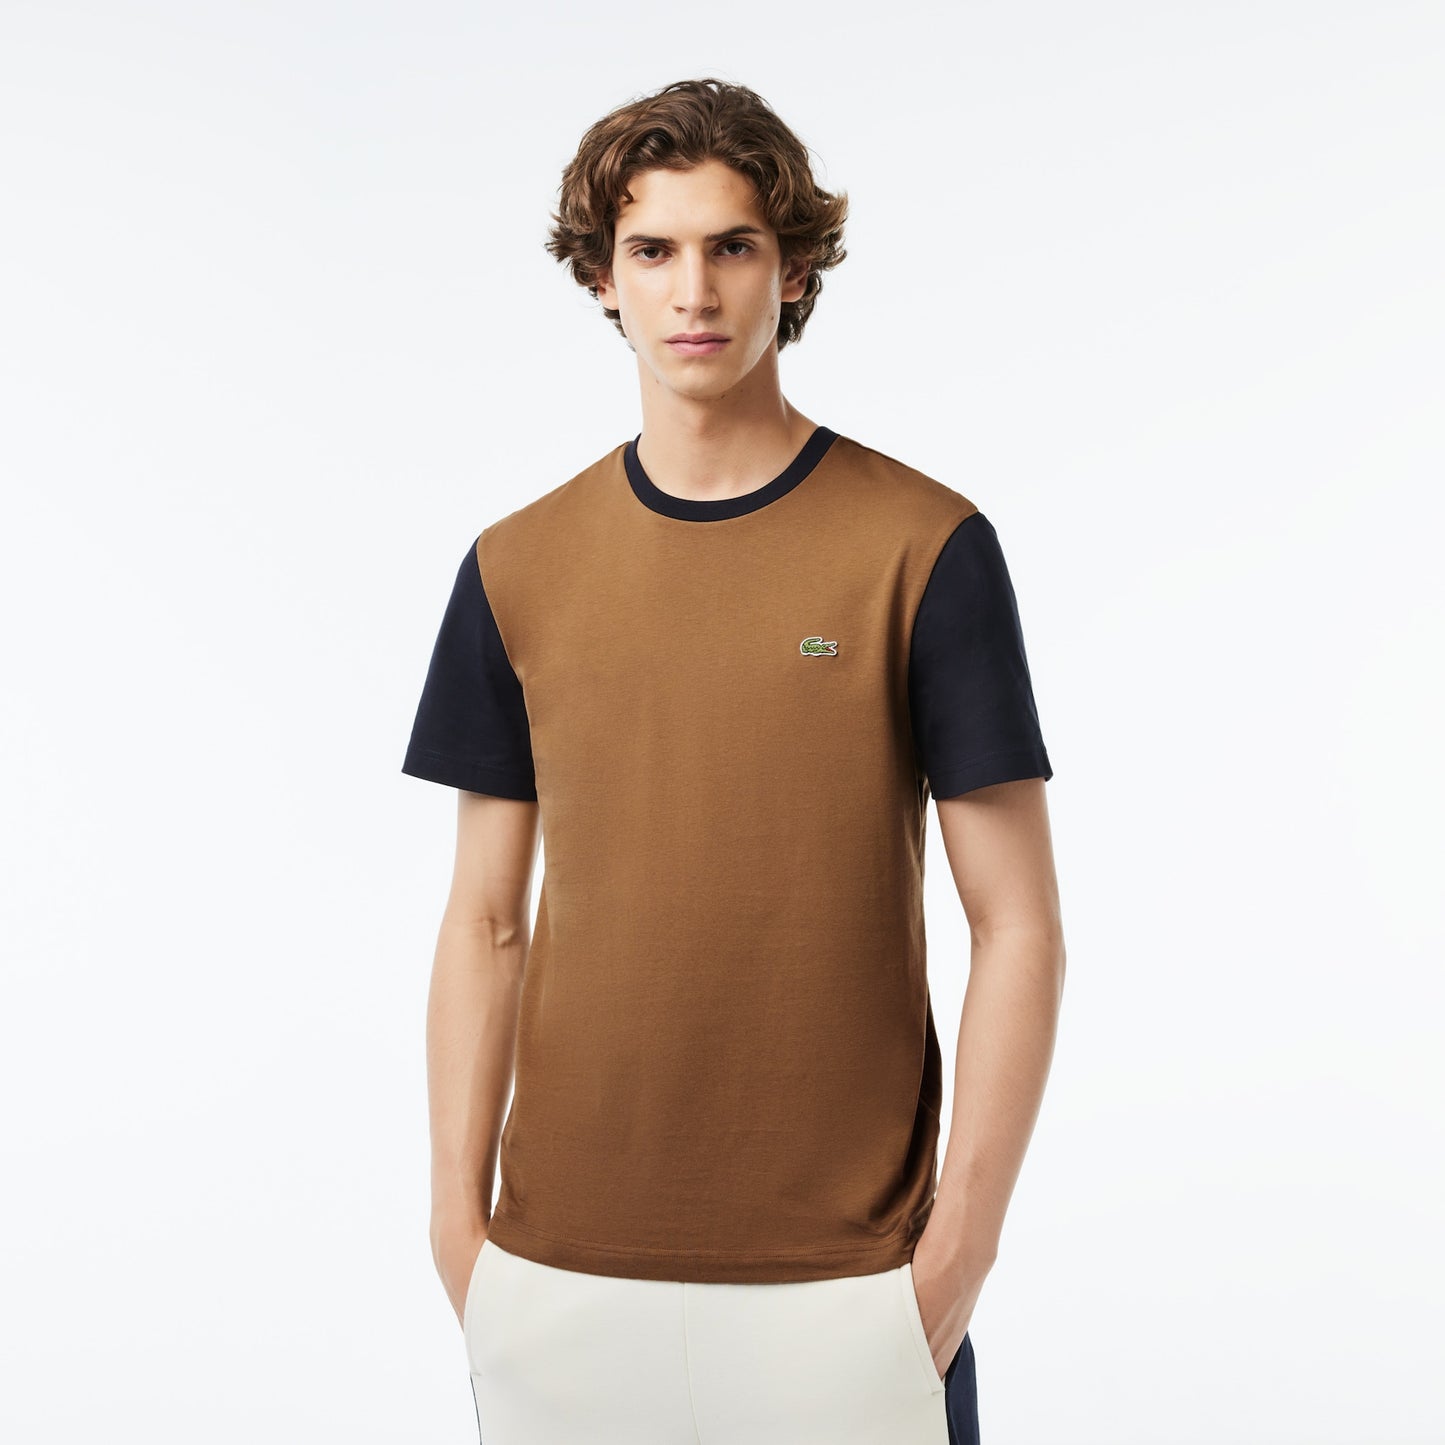 Lacoste - Men's Regular Fit Color block Jersey Shirt - Brown/Navy